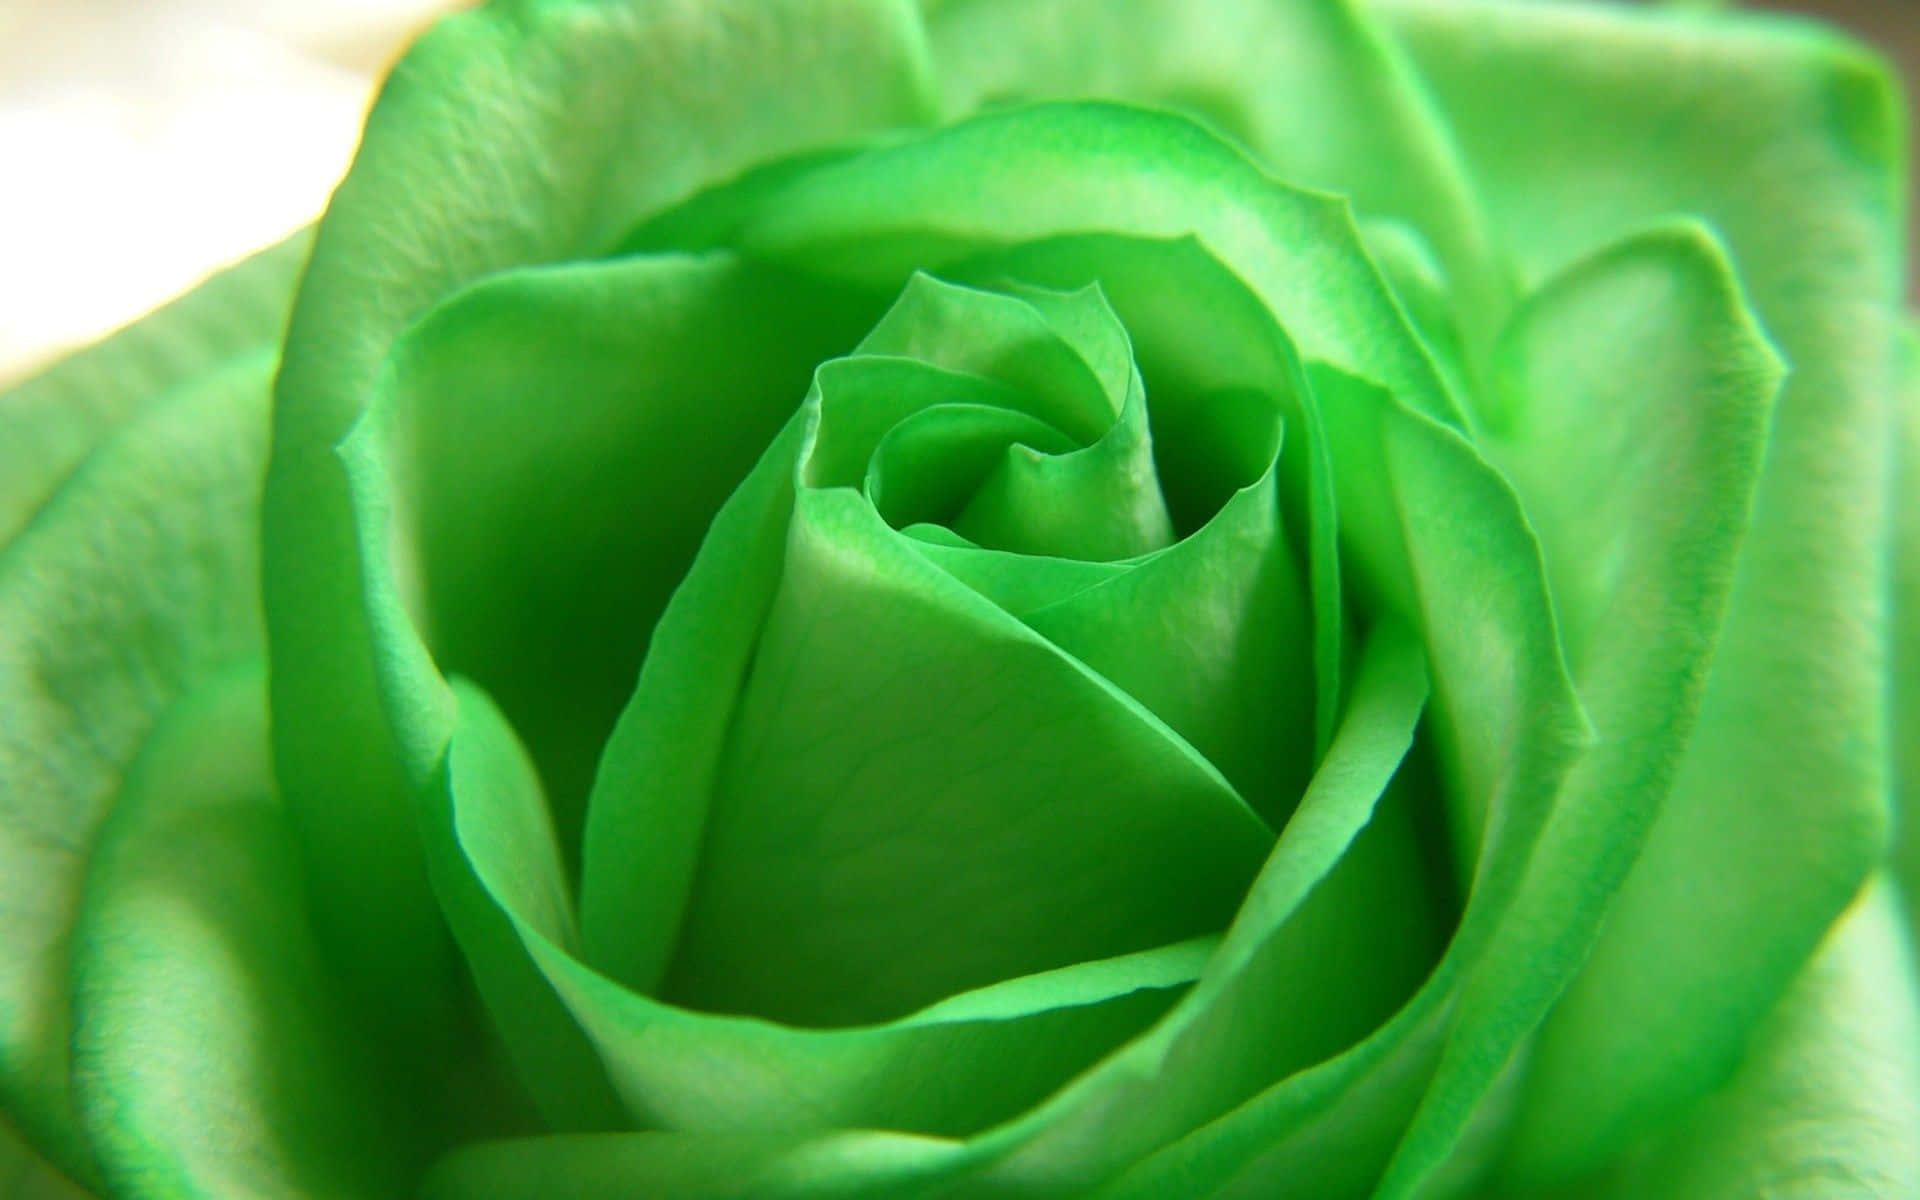 Cute Green Rose Close-up Wallpaper